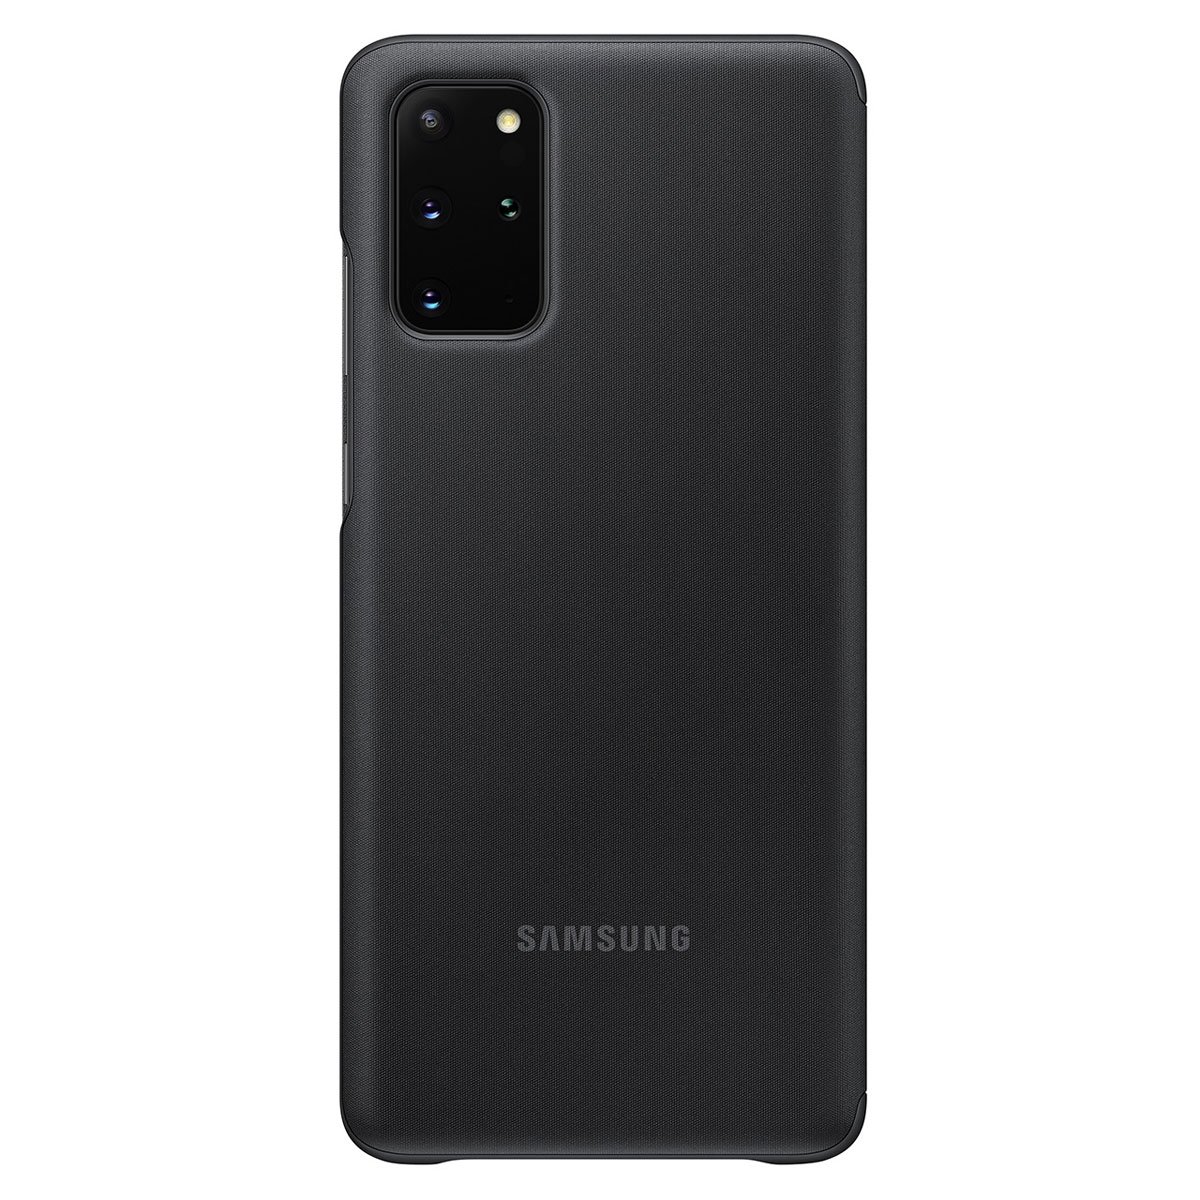 Funda Clearview Negra para Celular Samsung Galaxy S20 Plus